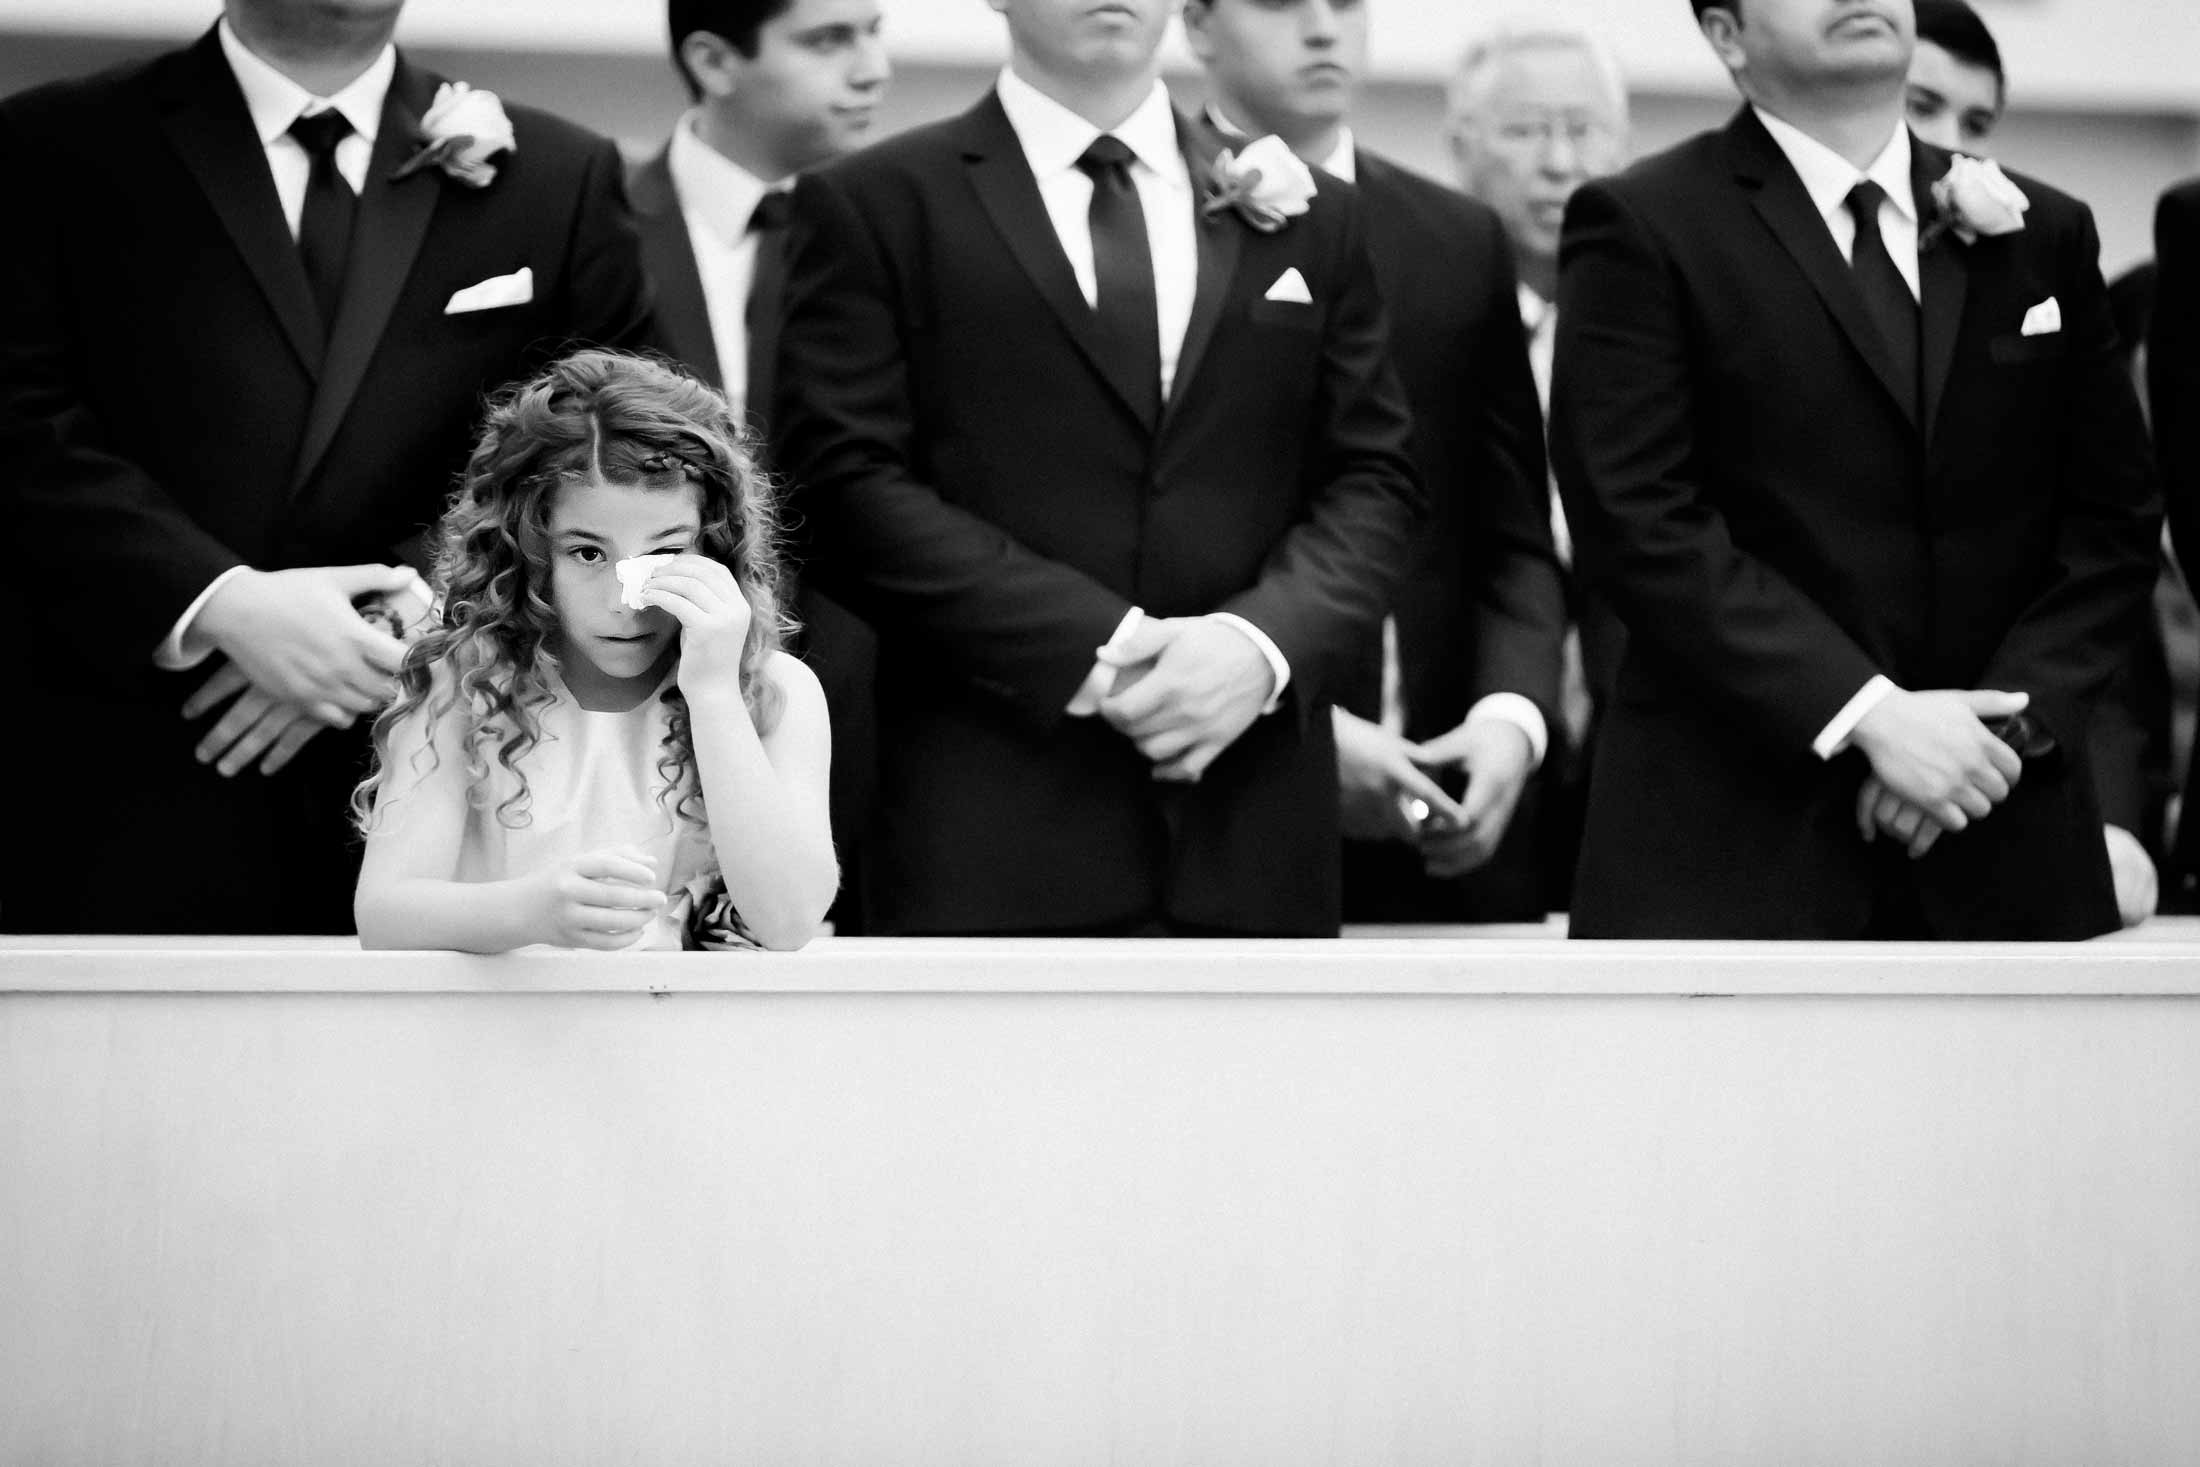 Young girl among wedding guests wiping tears